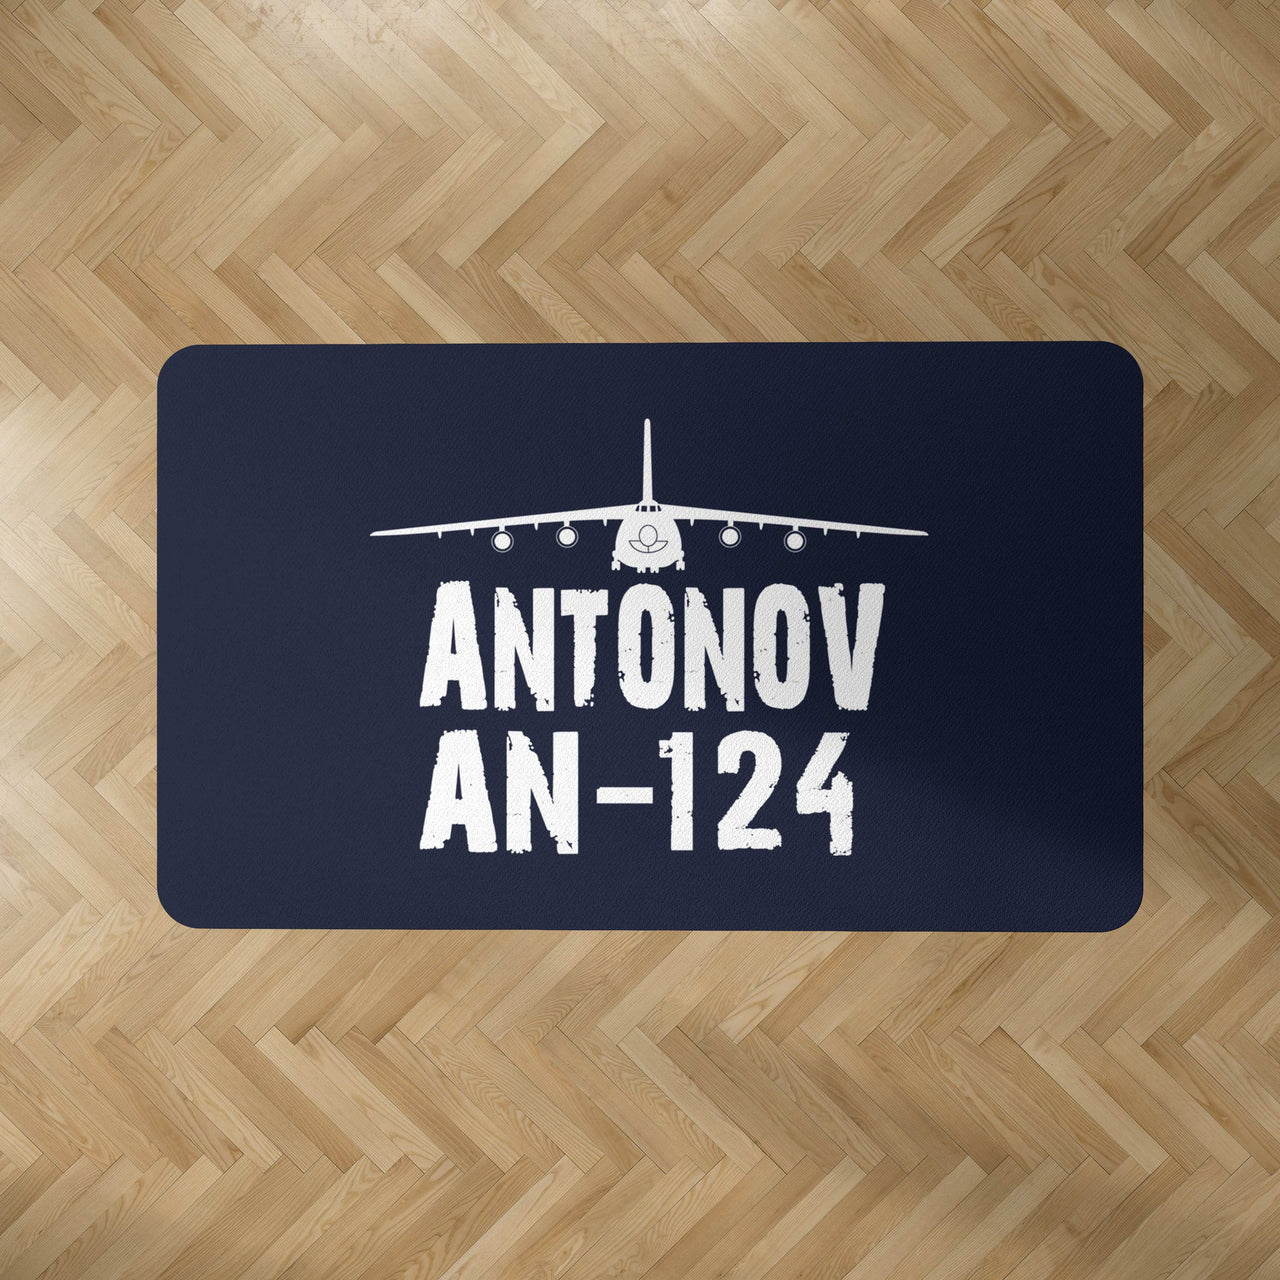 Antonov AN-124 & Plane Designed Carpet & Floor Mats